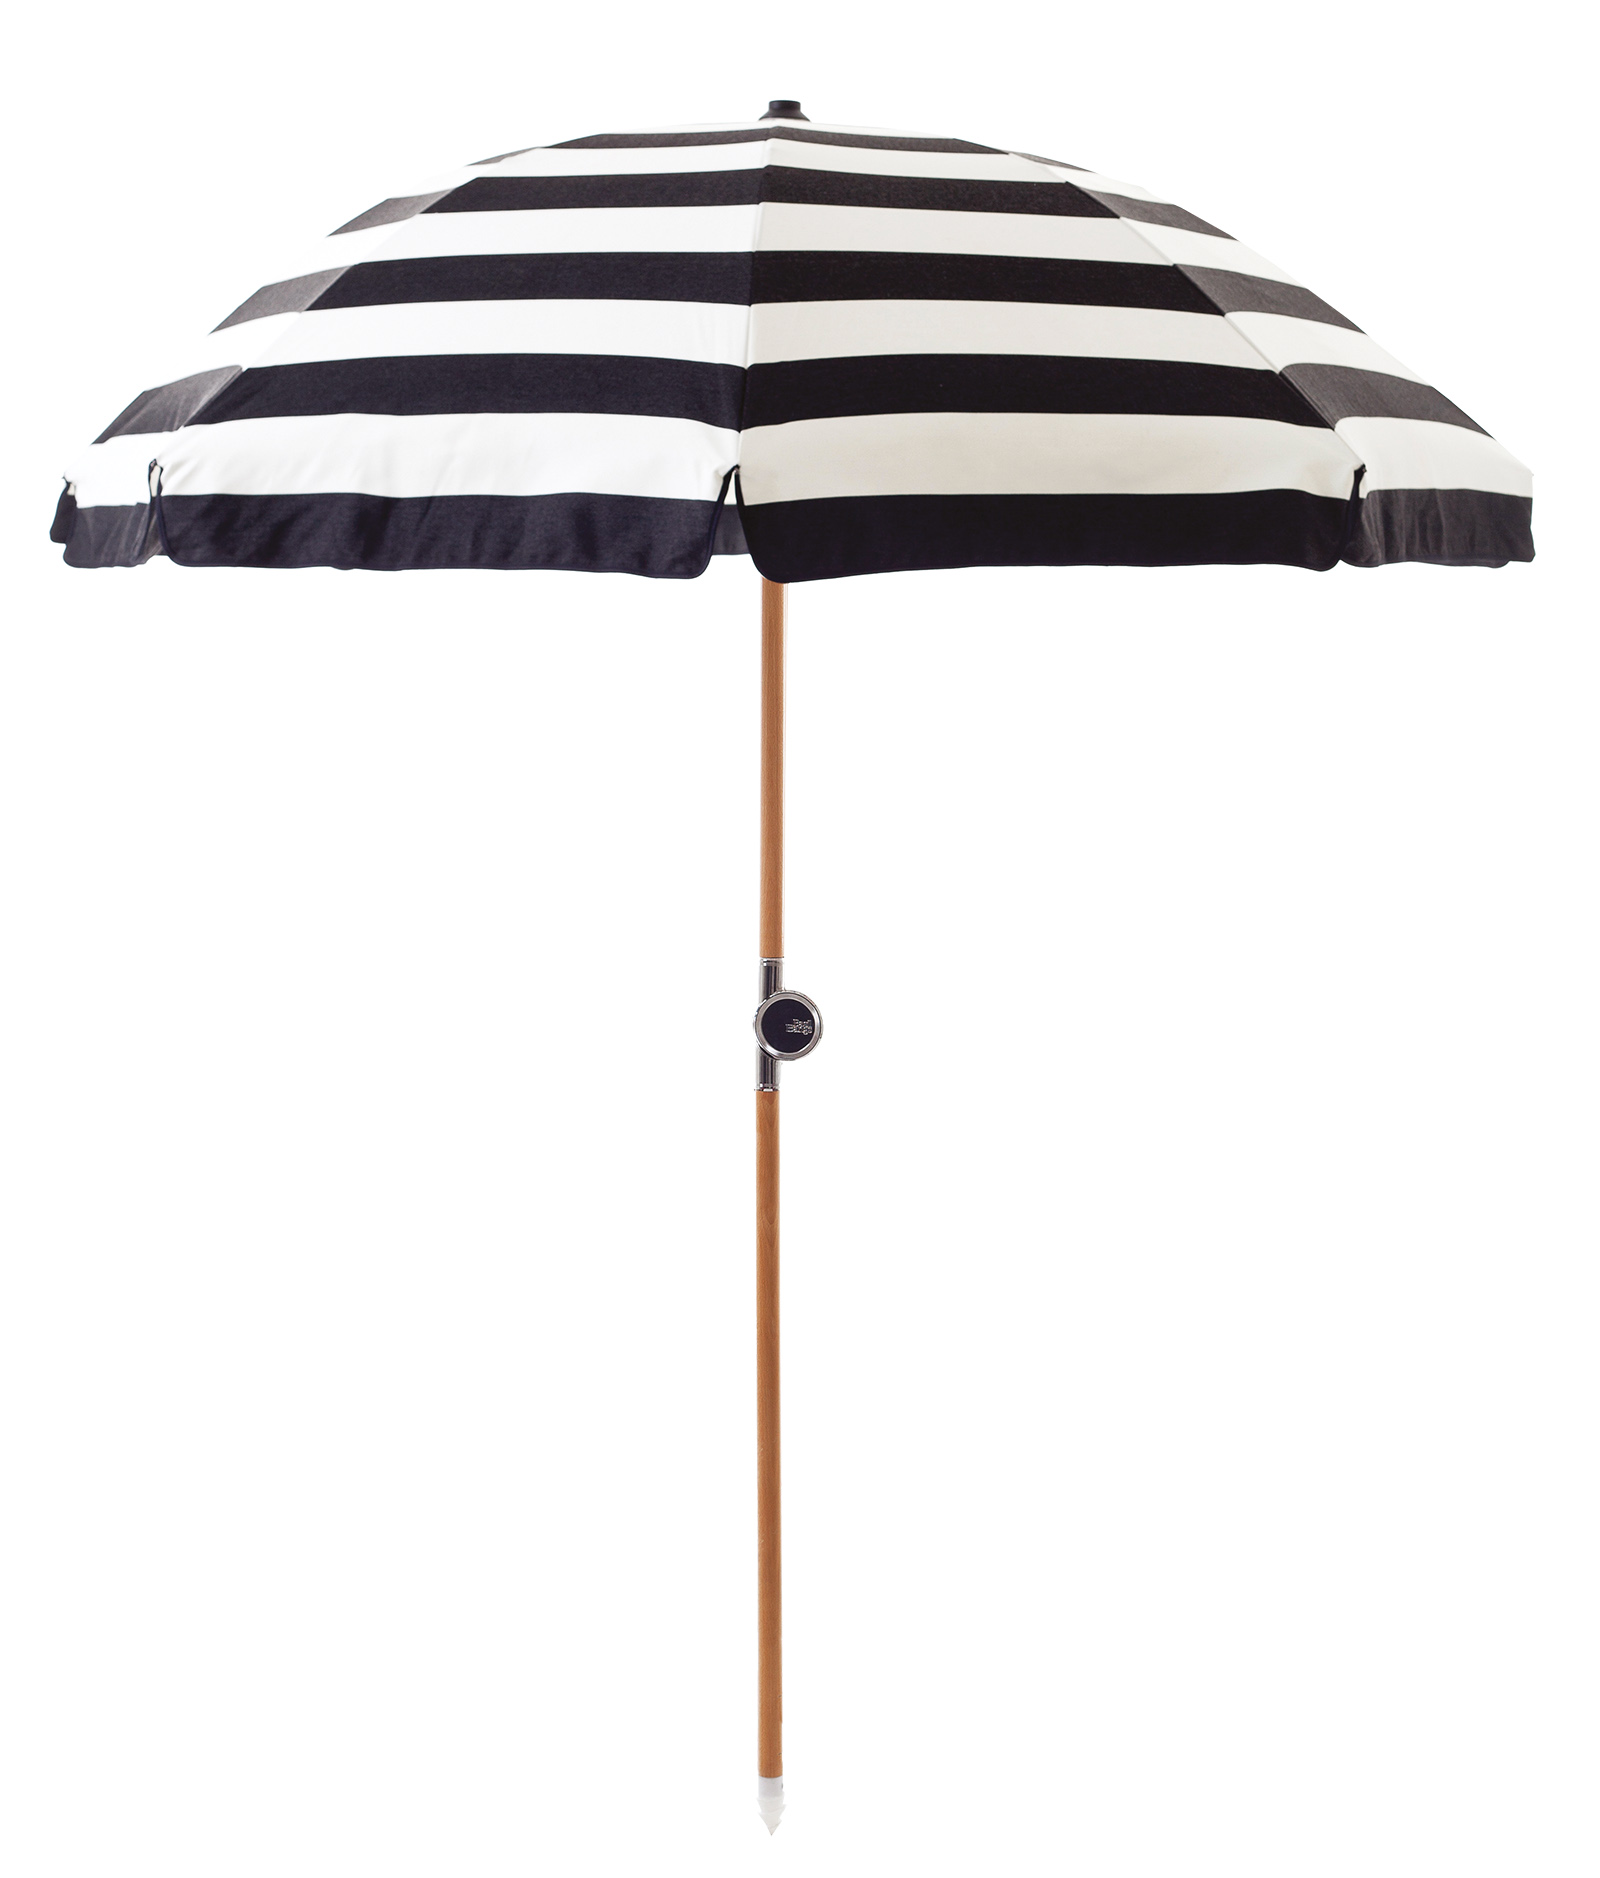 Chaplin-Stripe sideumbrella.jpg